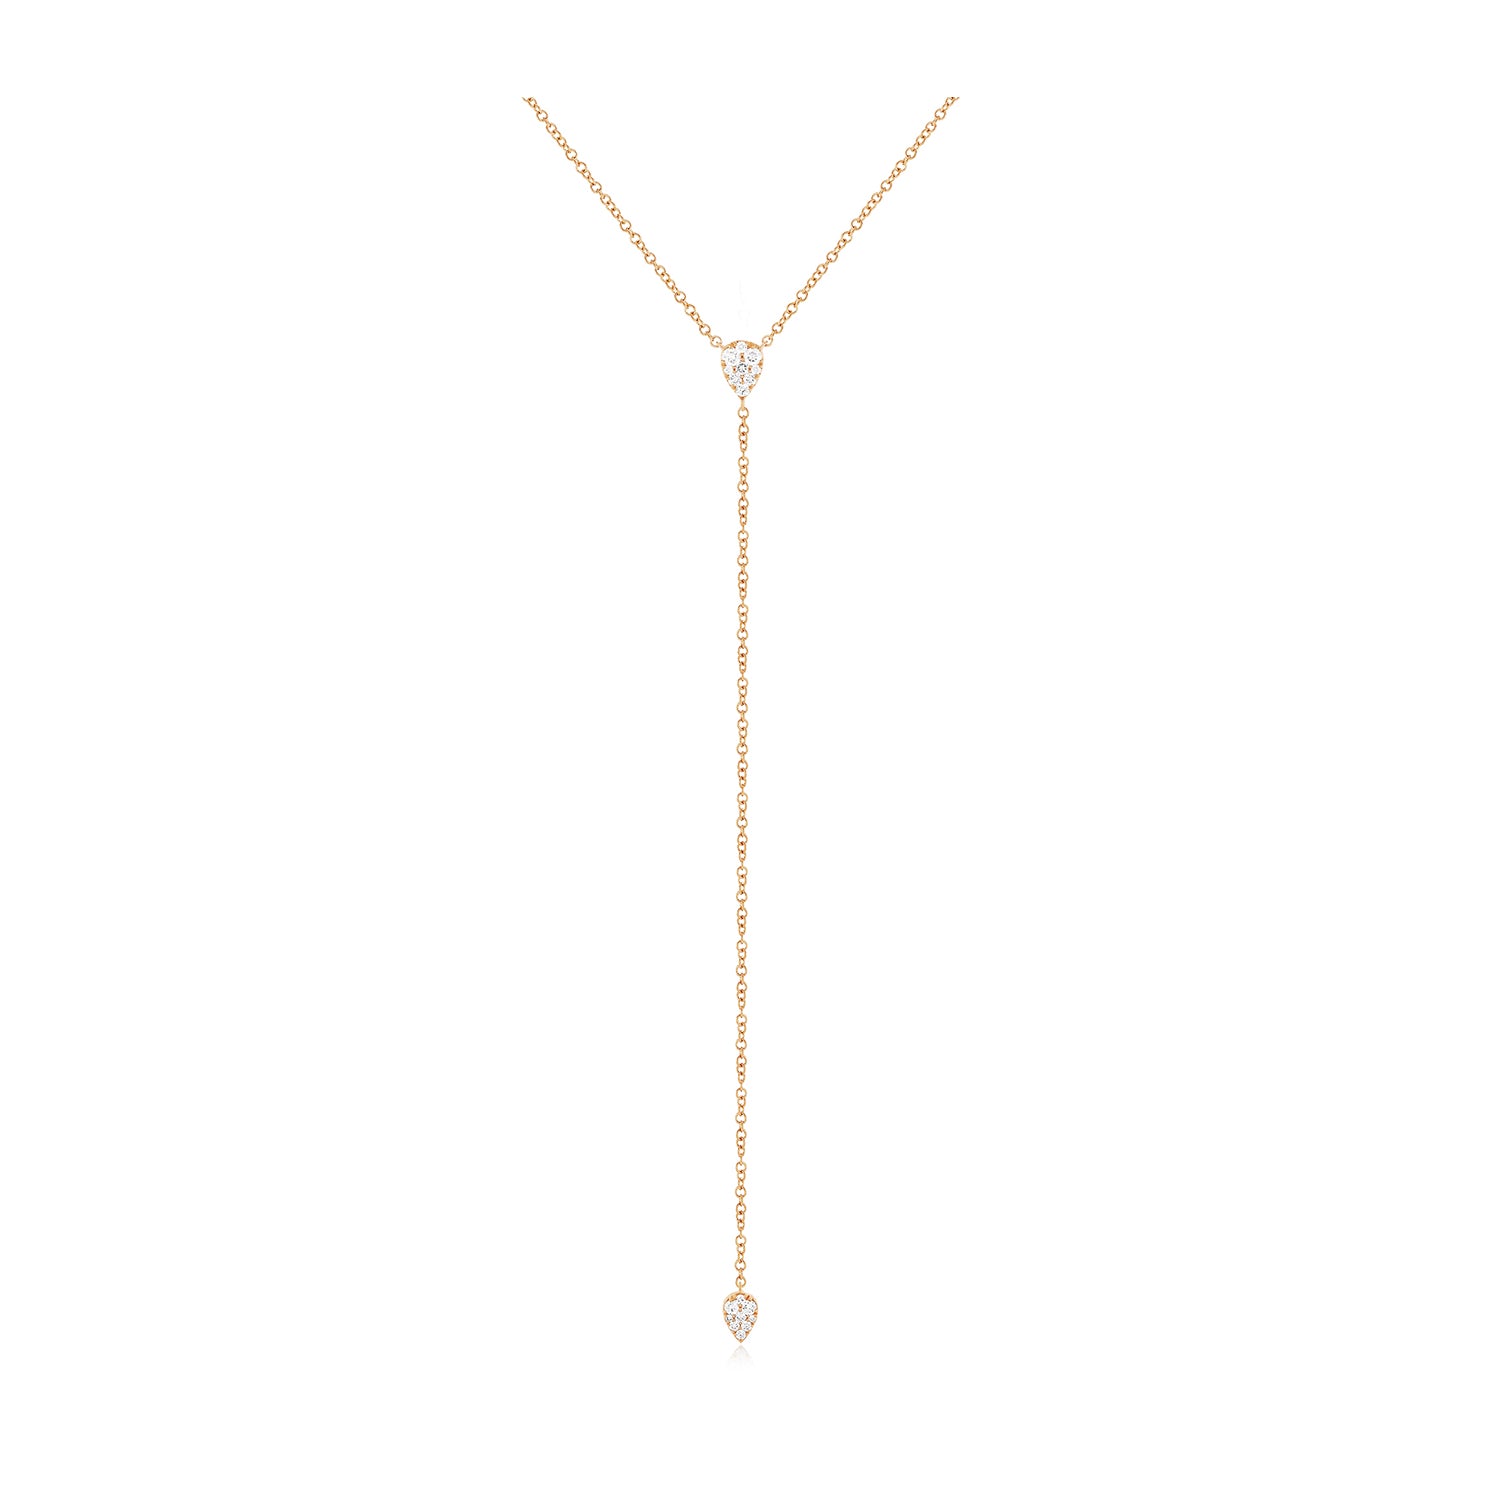 Full Cut Diamond Teardrop Lariat Necklace in 14k rose gold